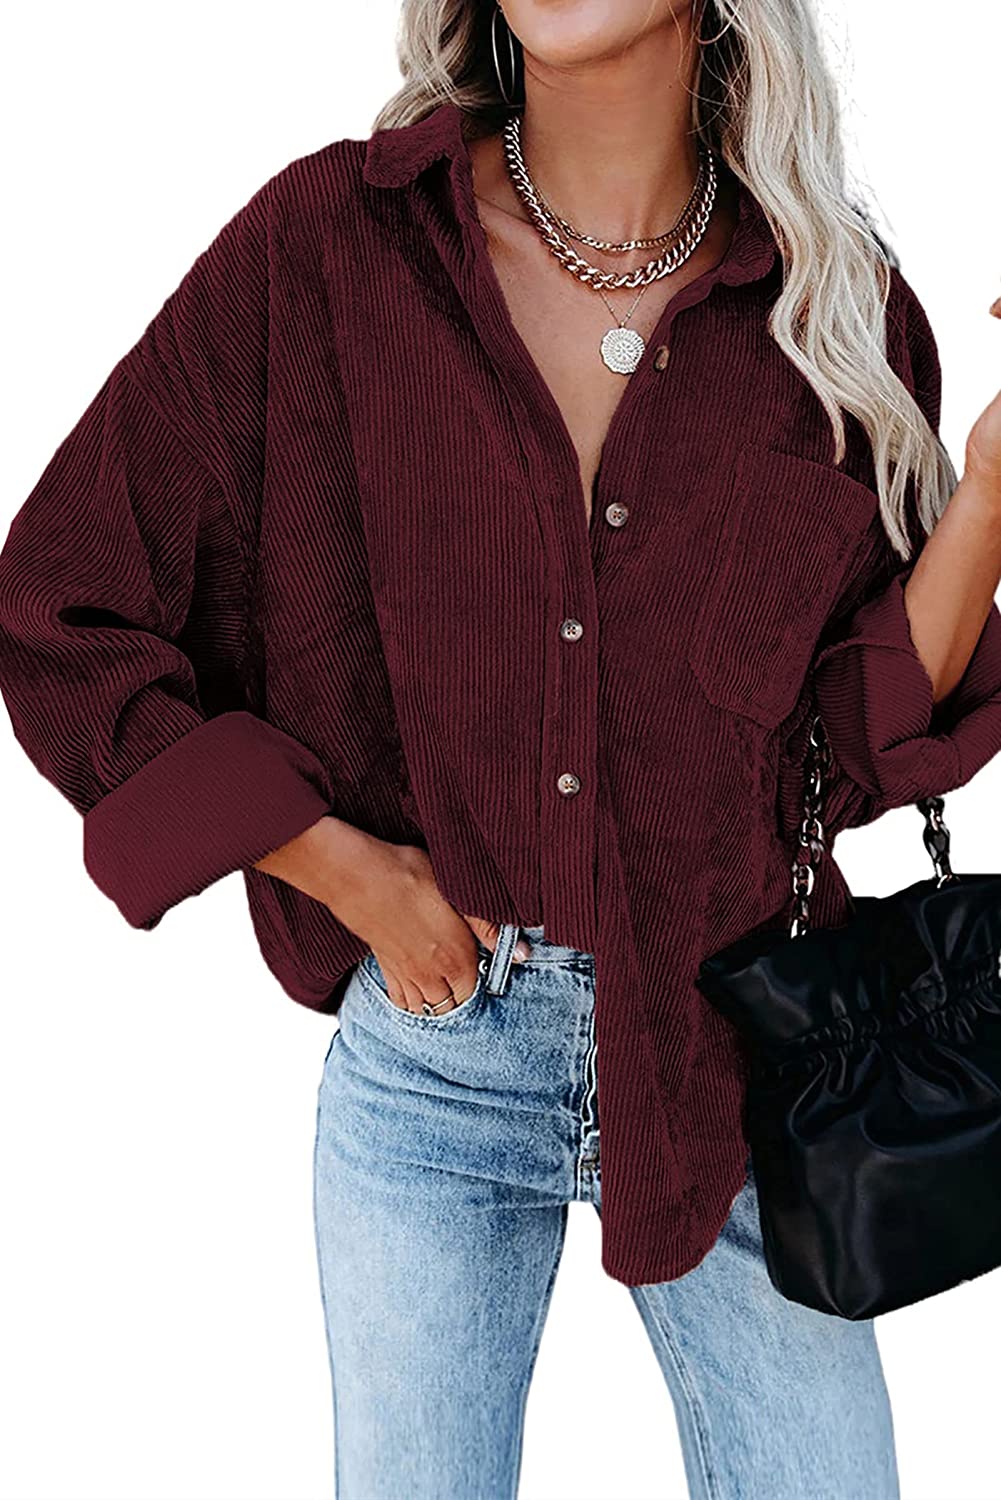 Actloe Womens Corduroy Shirt Long Sleeve Oversized Button Down